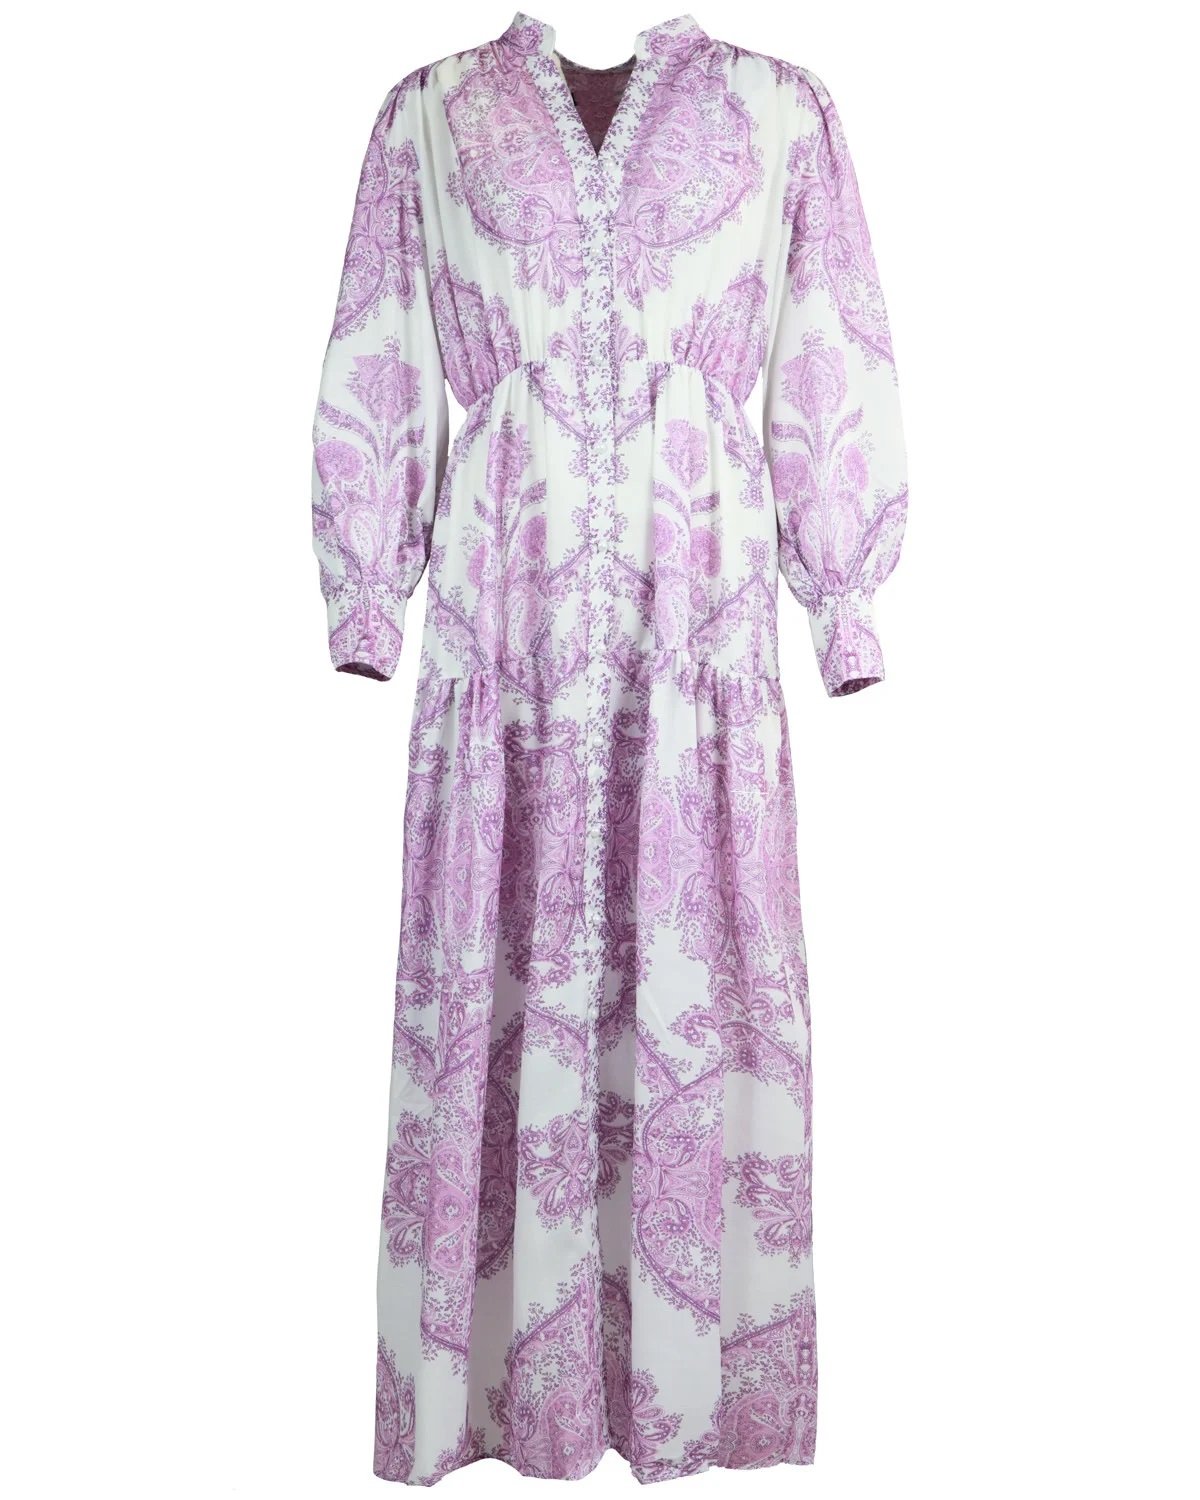 Jaimy Savannah Printed Maxi Dress in Lilac.jpg